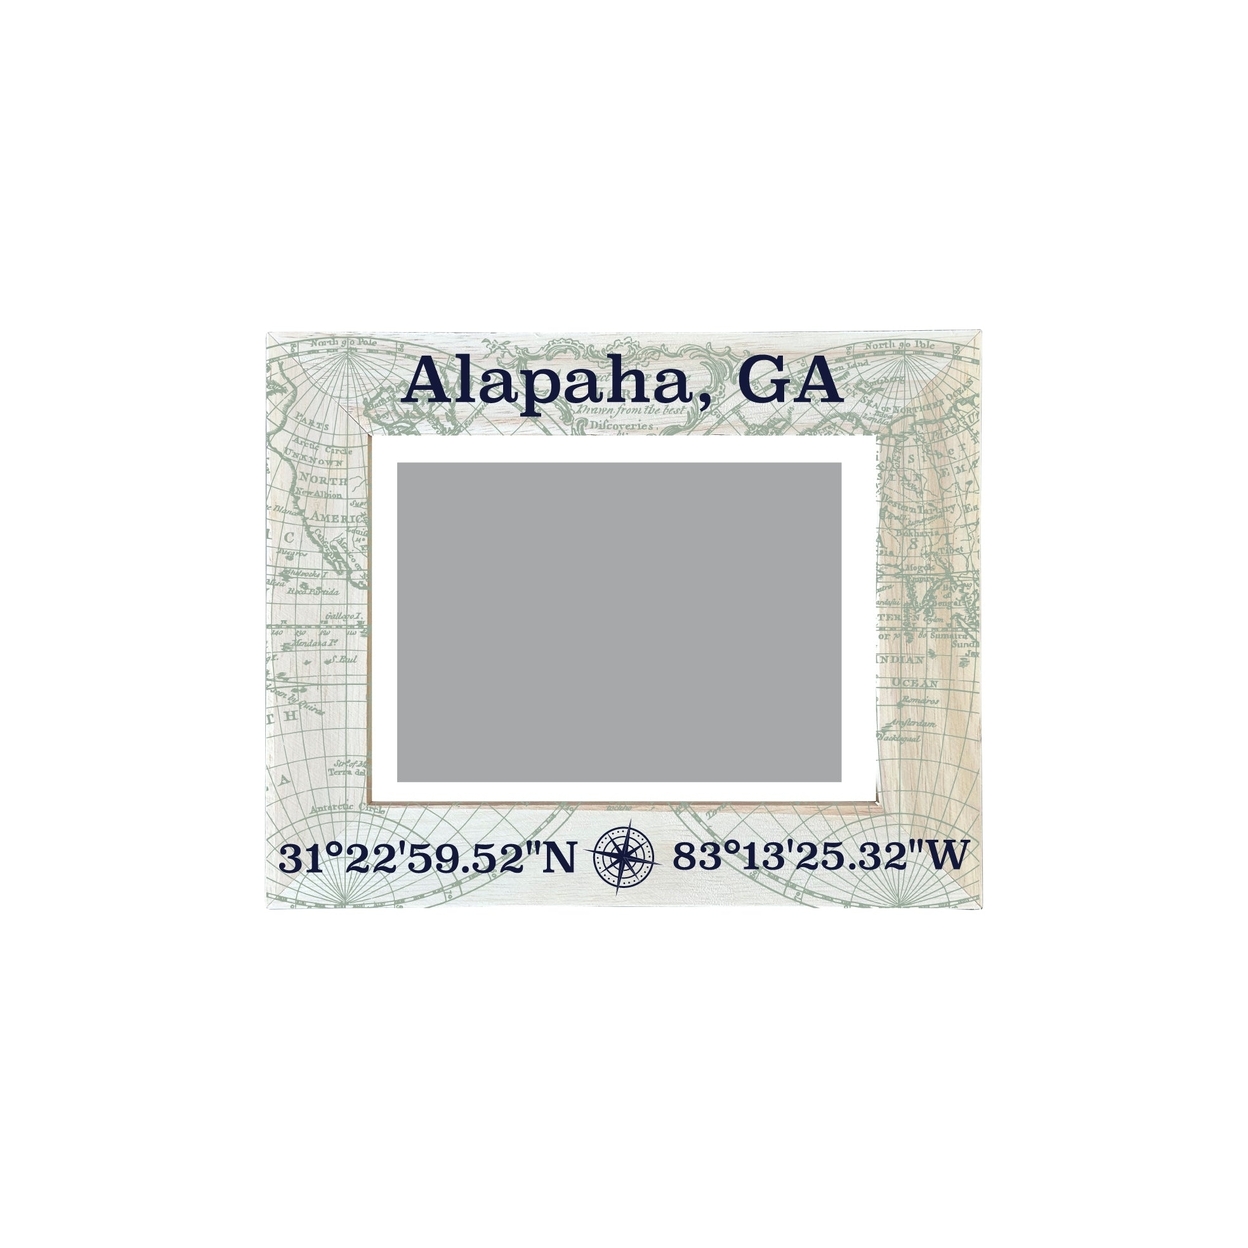 Alapaha Georgia Souvenir Wooden Photo Frame Compass Coordinates Design Matted To 4 X 6